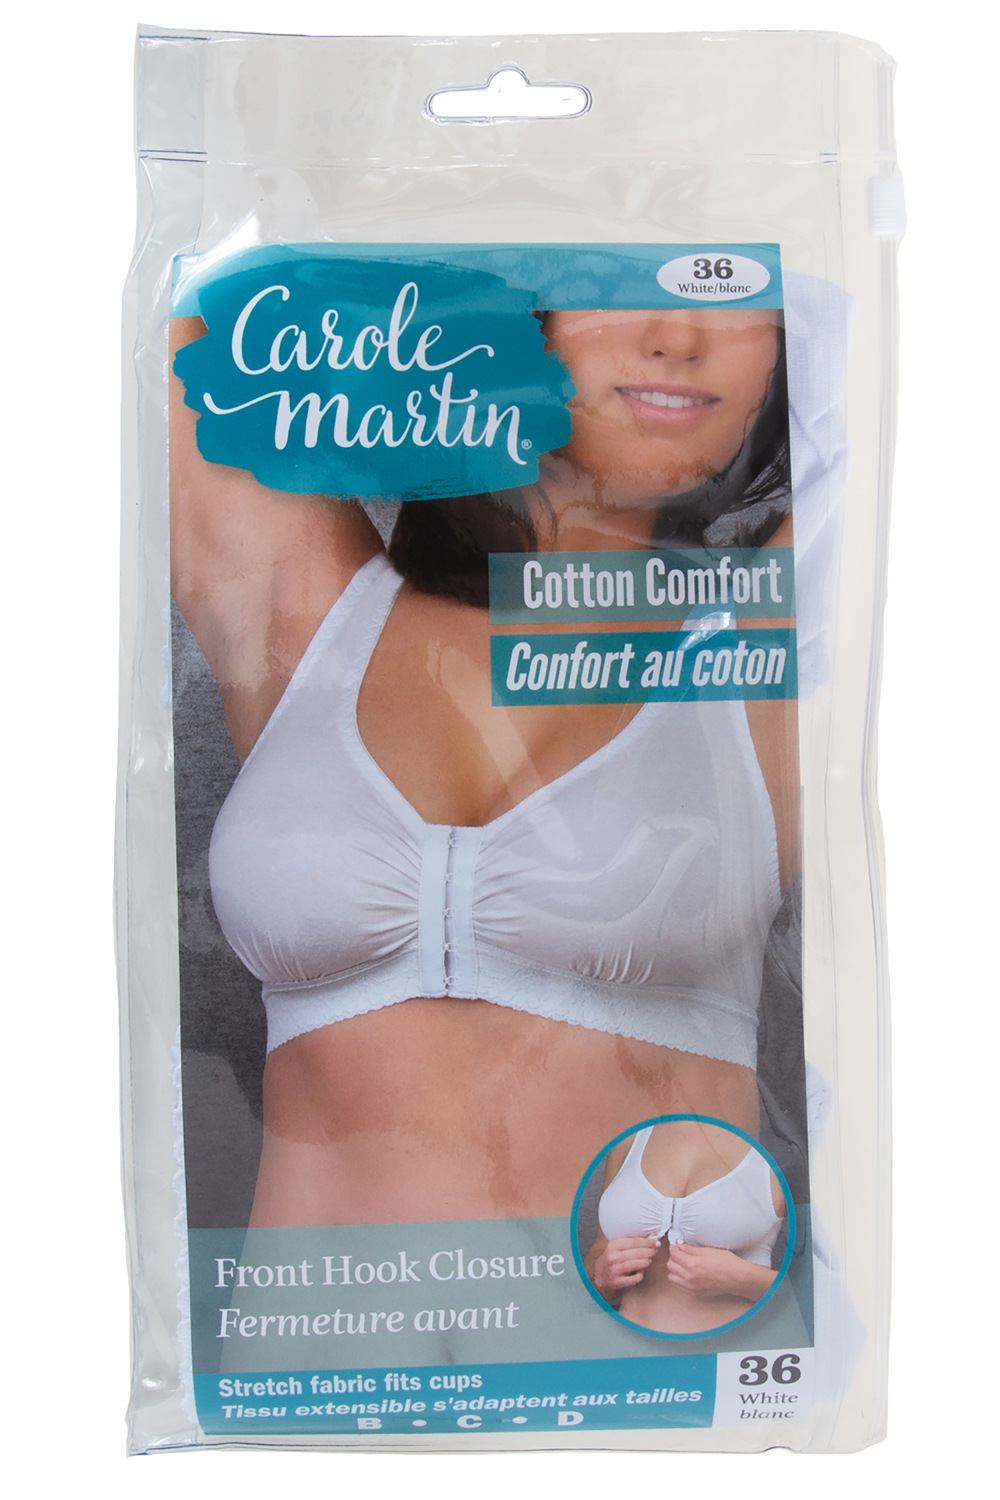 Carole Martin - Cotton Comfort bra, white, 36. Colour: white. Size: 36 b/c/d/dd